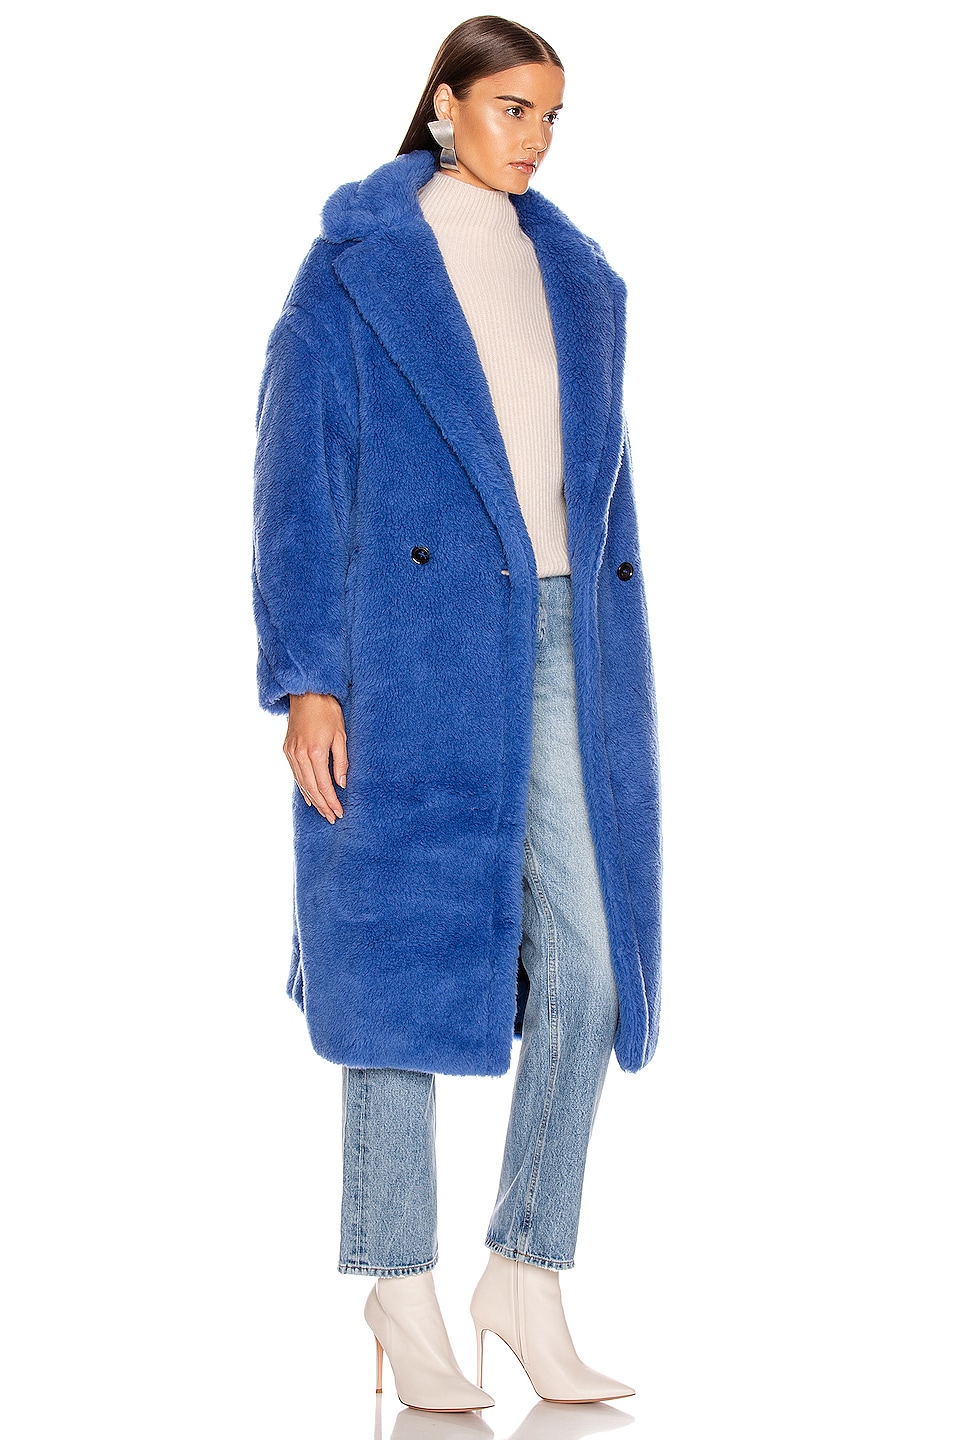 Max Mara Teddy Tedgirl Coat in Cornflower Blue | FWRD